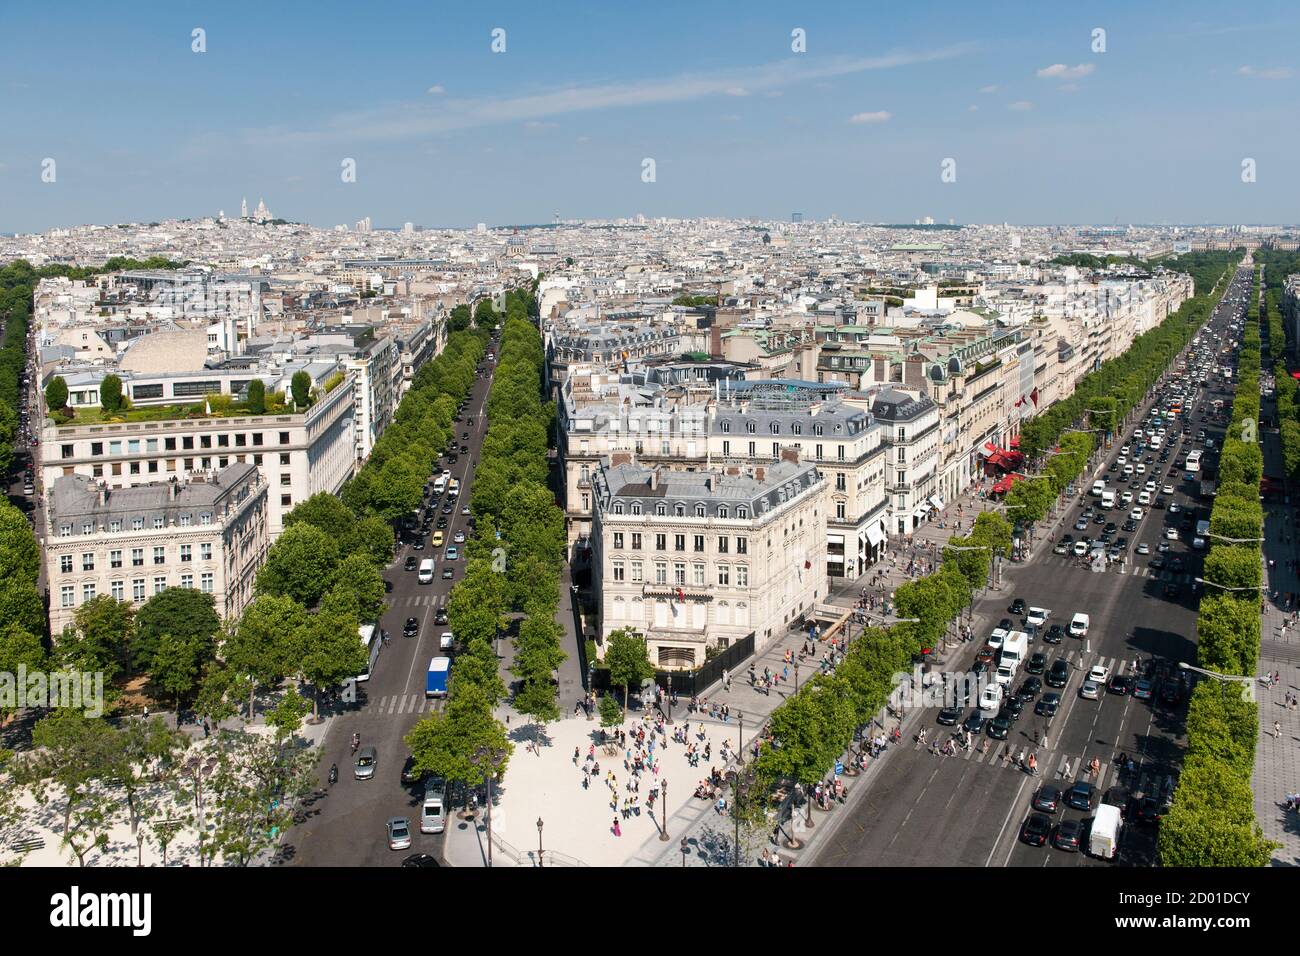 View across Paris from the top of the Arc De Triomphe. Avenue de Friedland runs in the centre and Avenue des Champs Élysées runs down the right side. Stock Photo